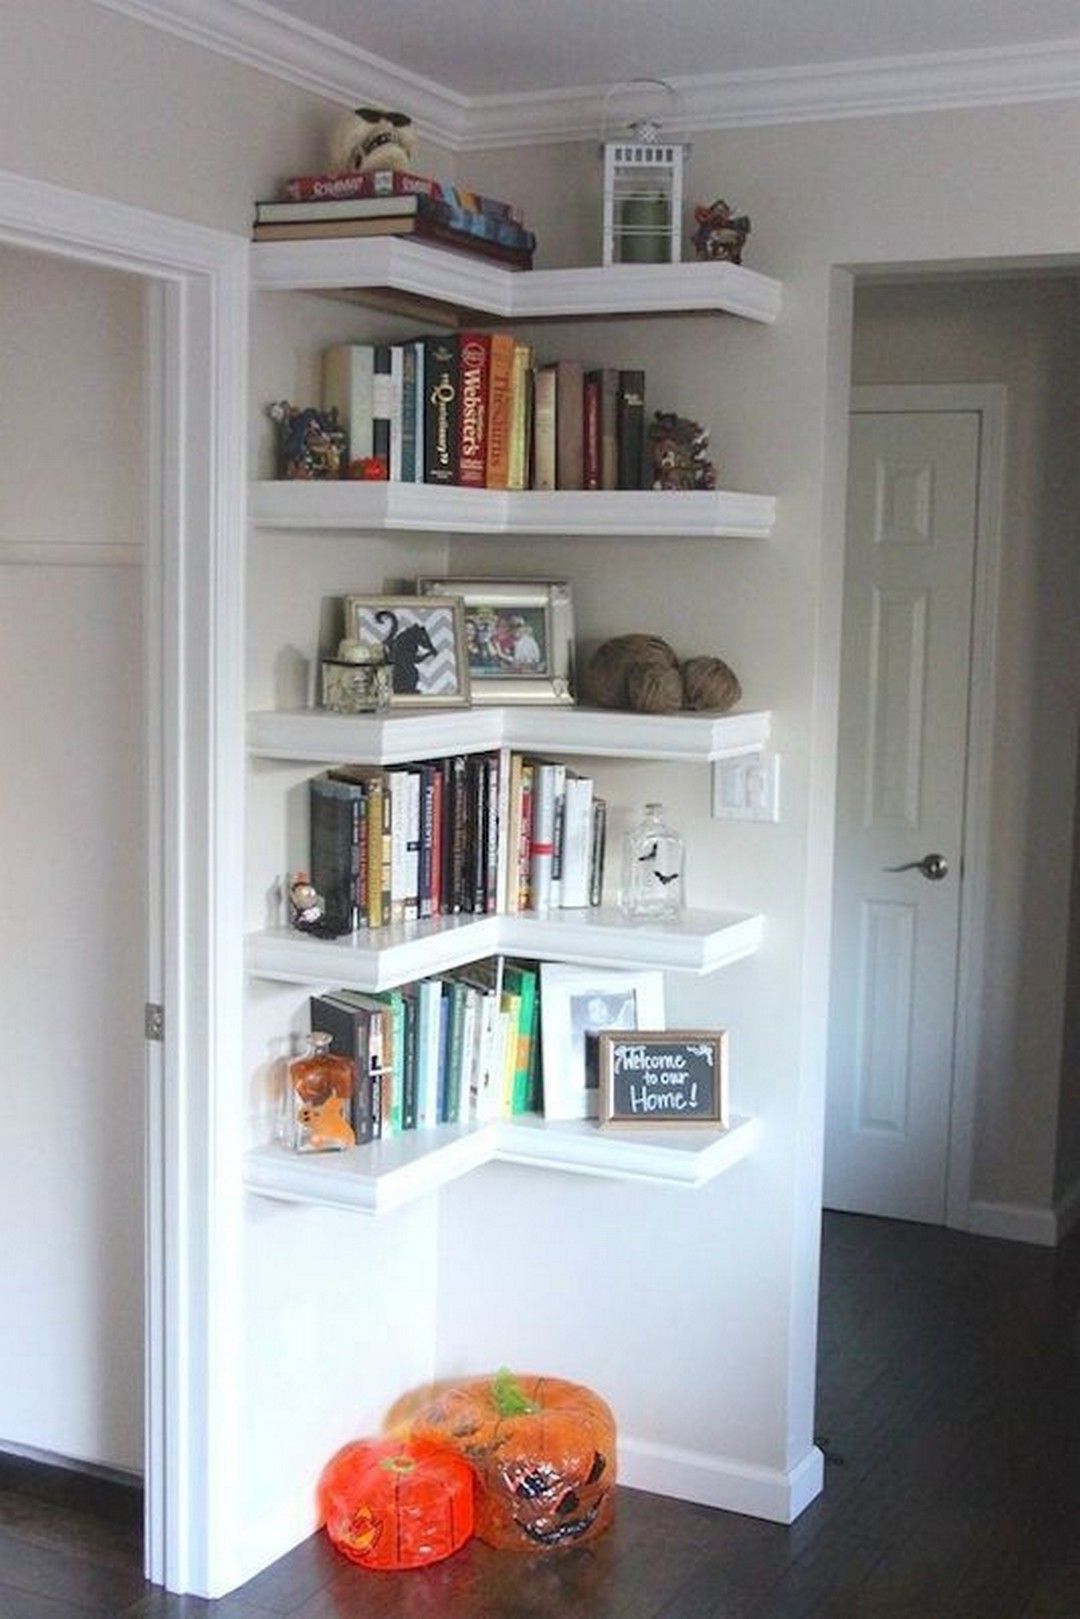 8- Shelves in Unsude corners